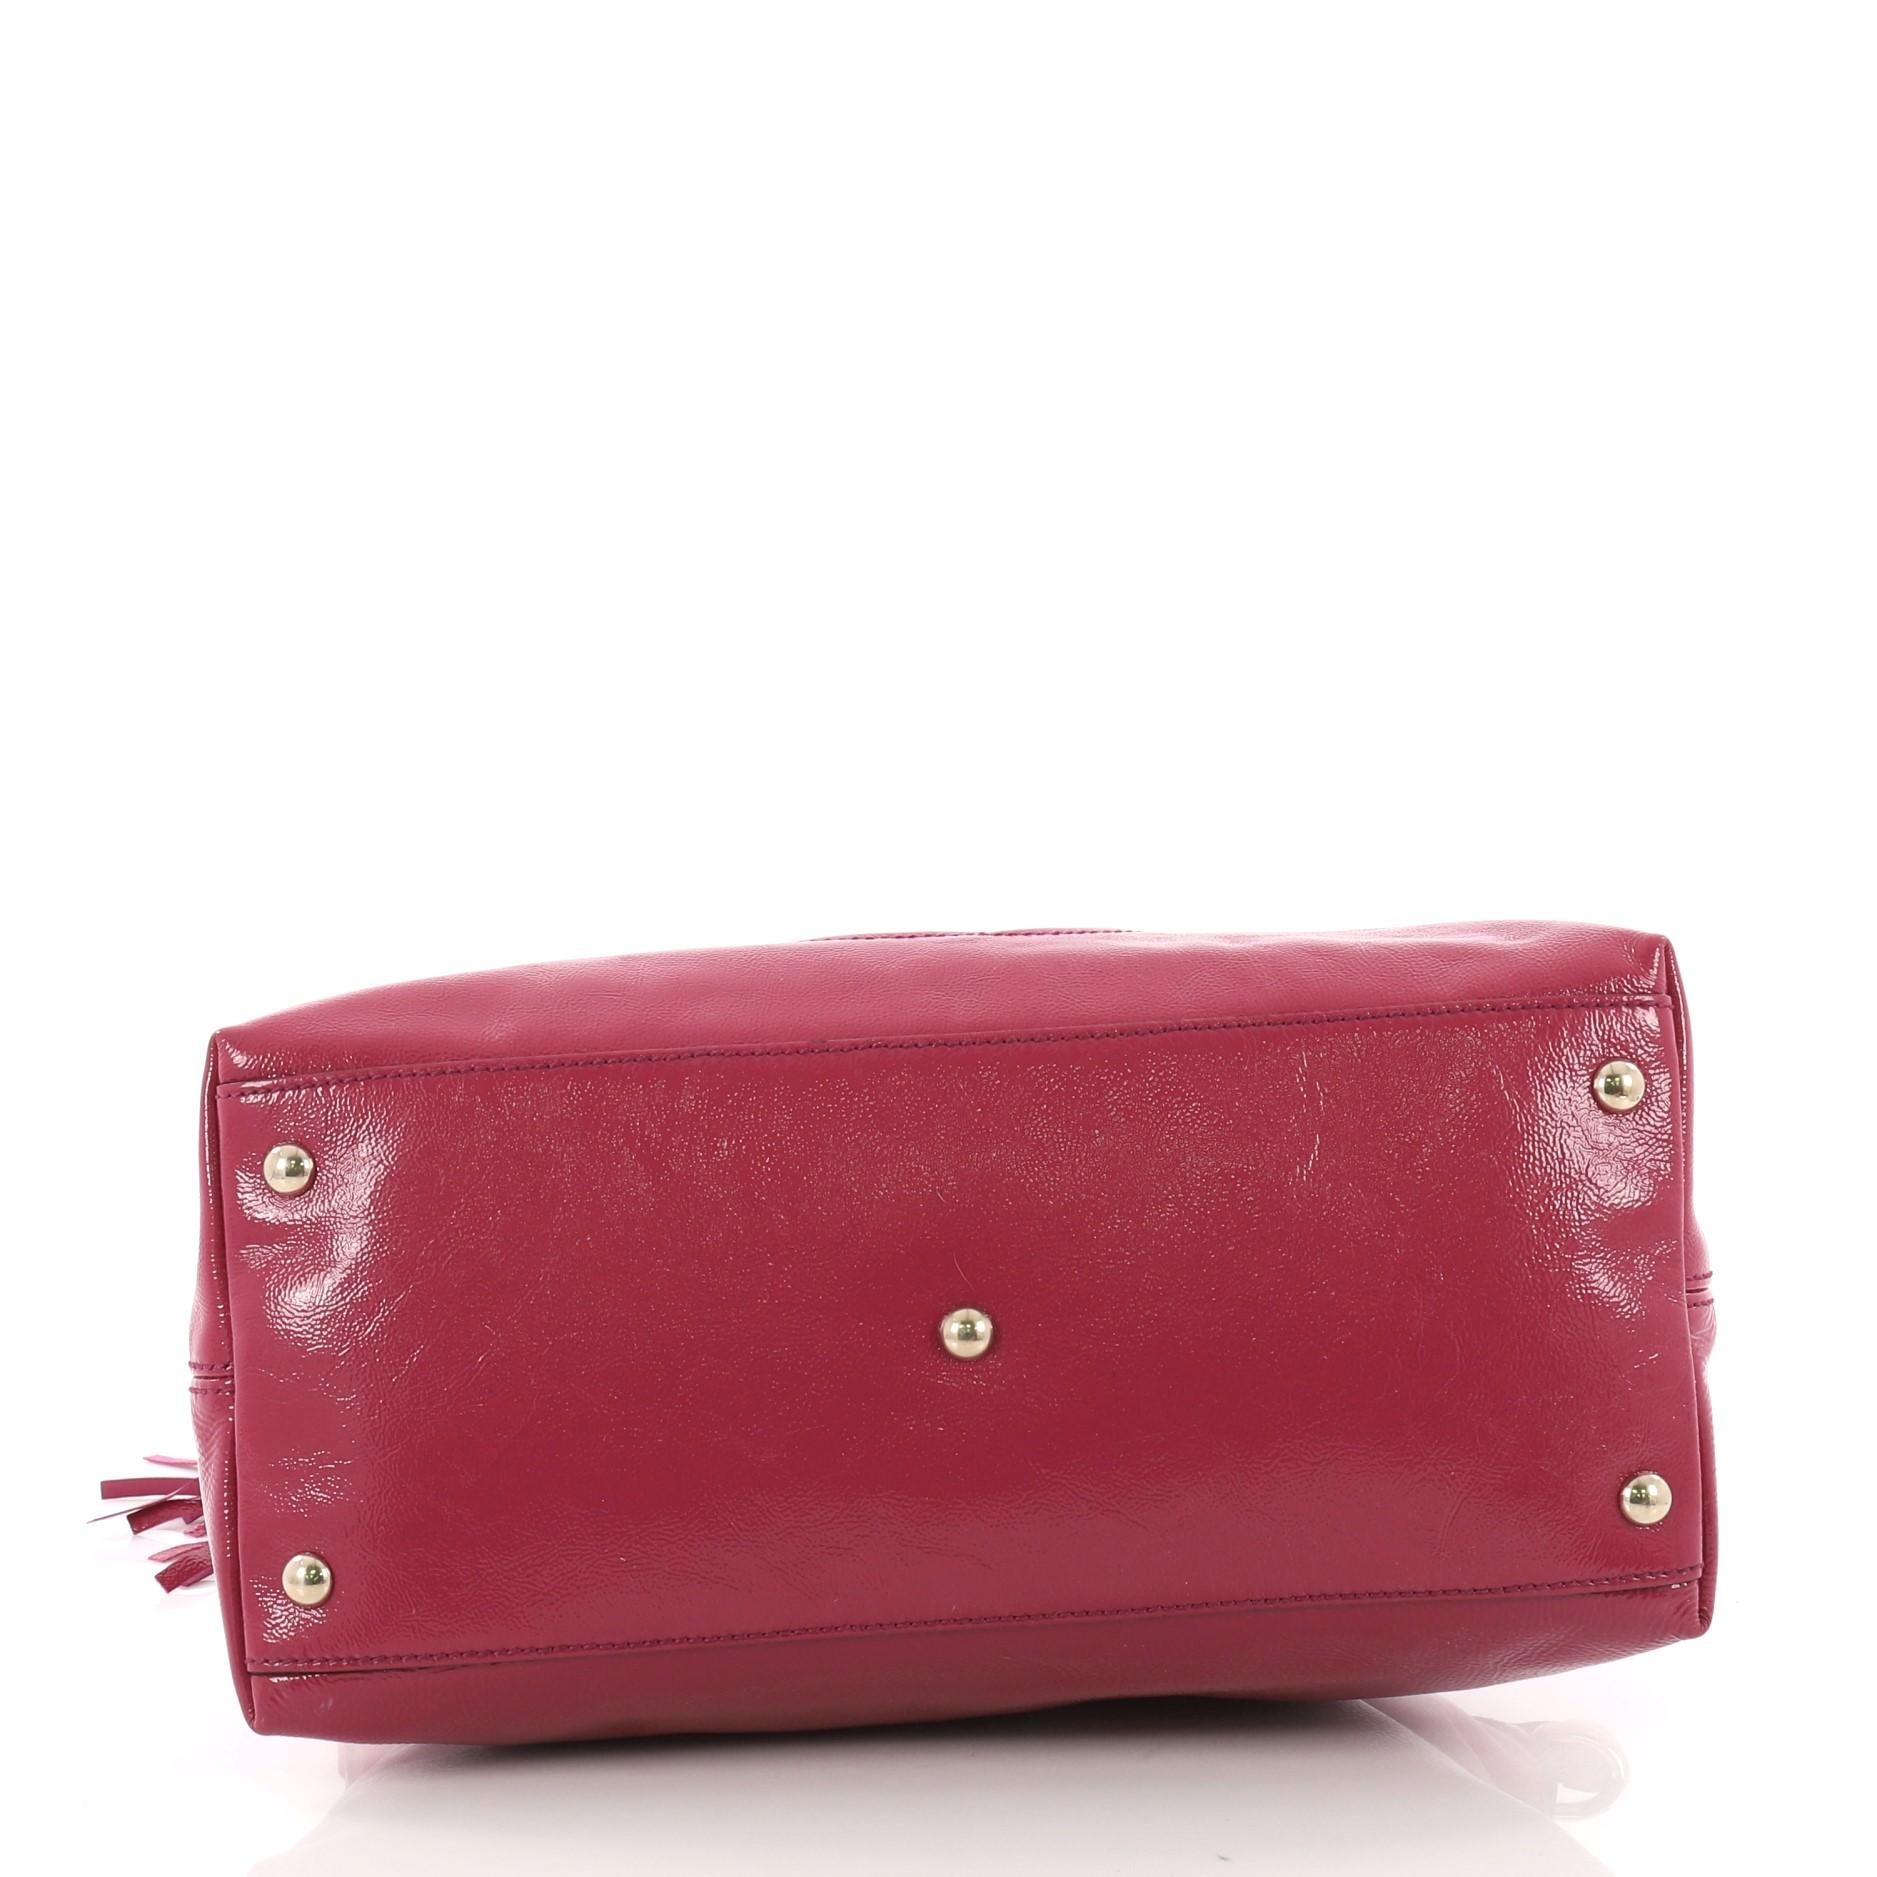 Women's or Men's Gucci Soho Convertible Soft Top Handle Bag Patent